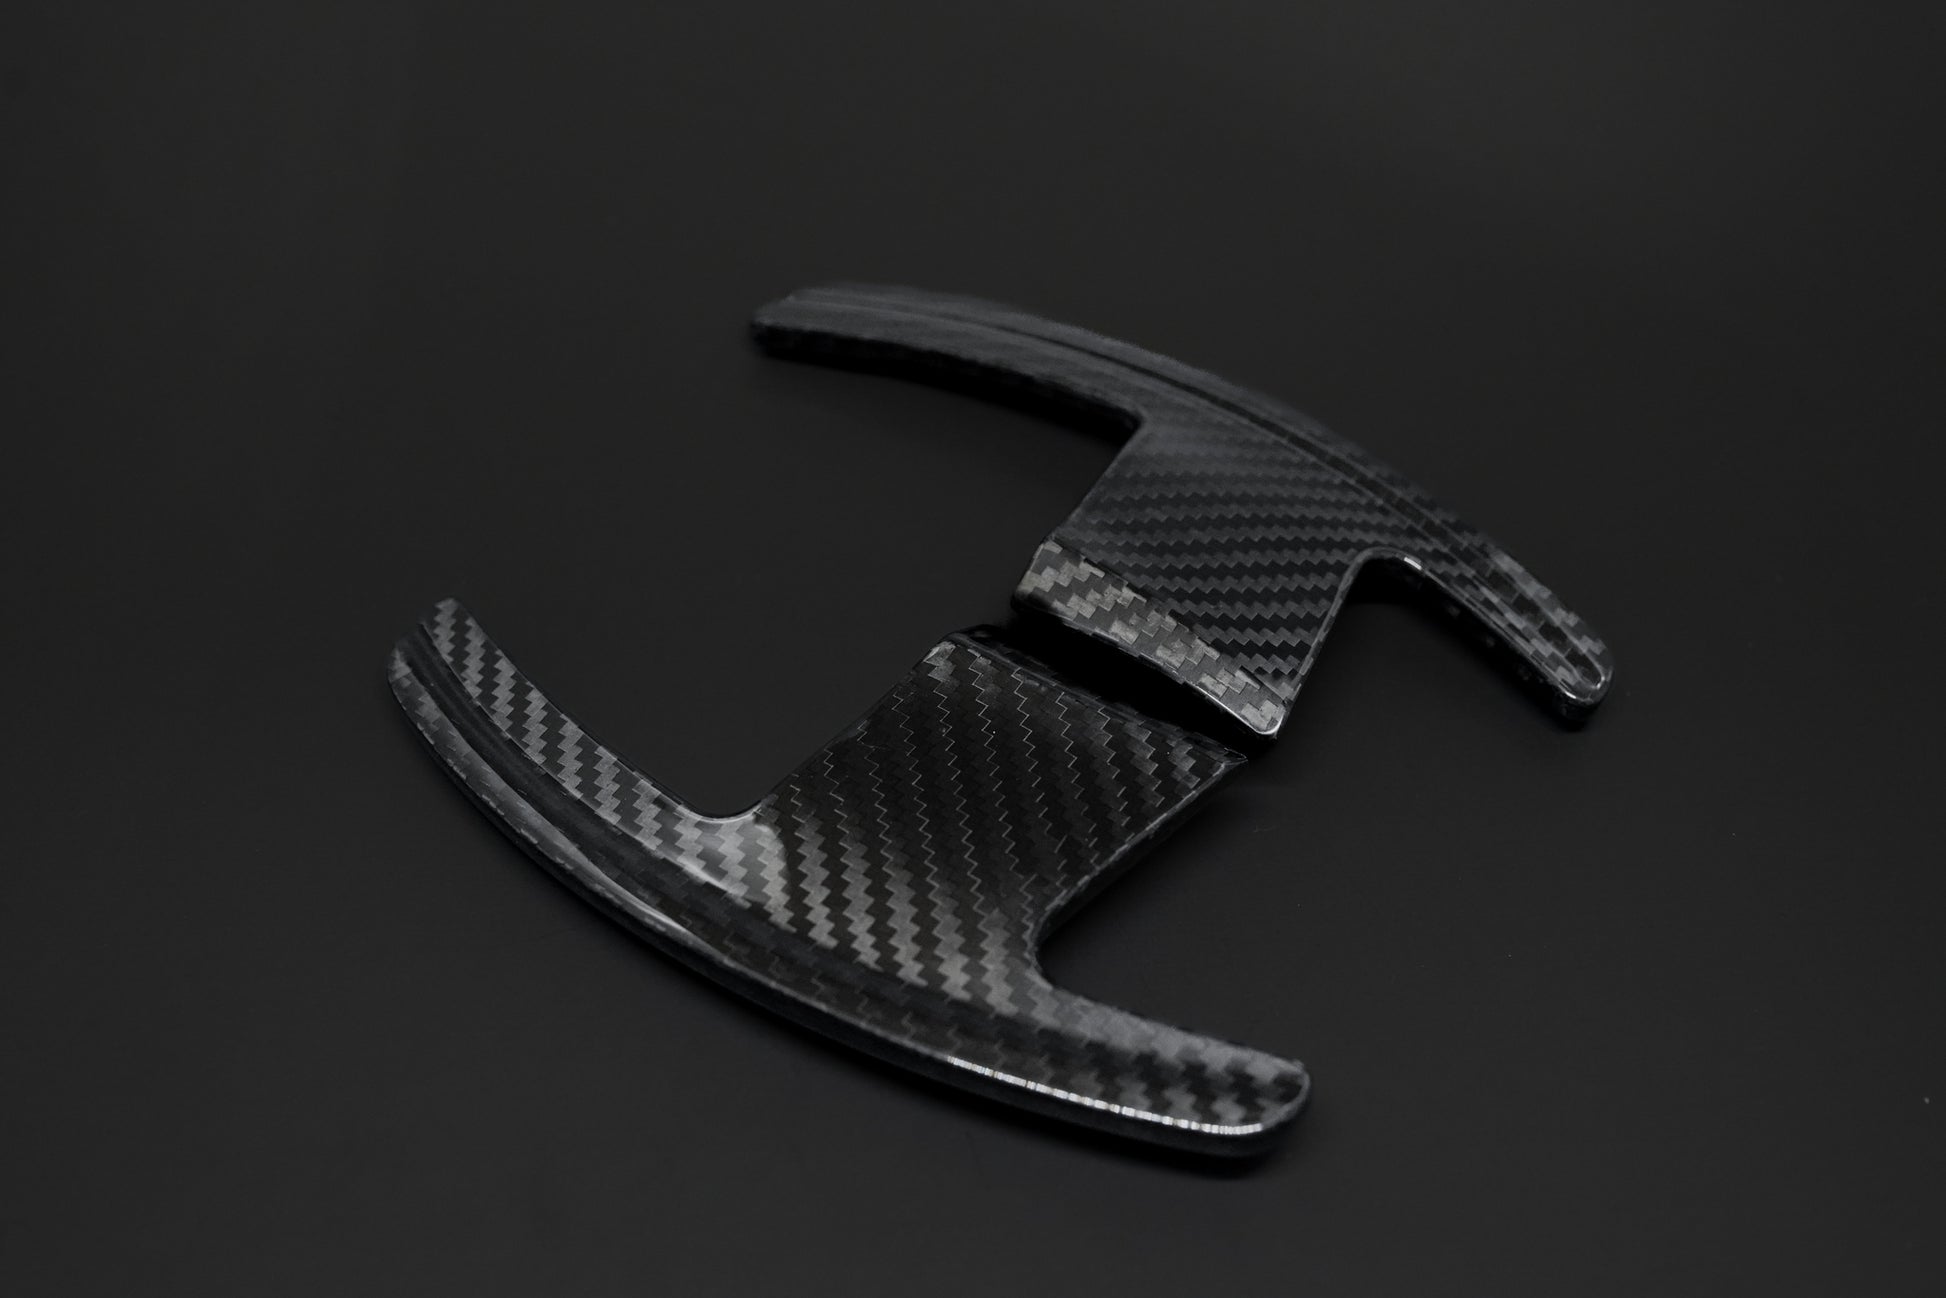 F90 bmw carbon fiber paddle shifters